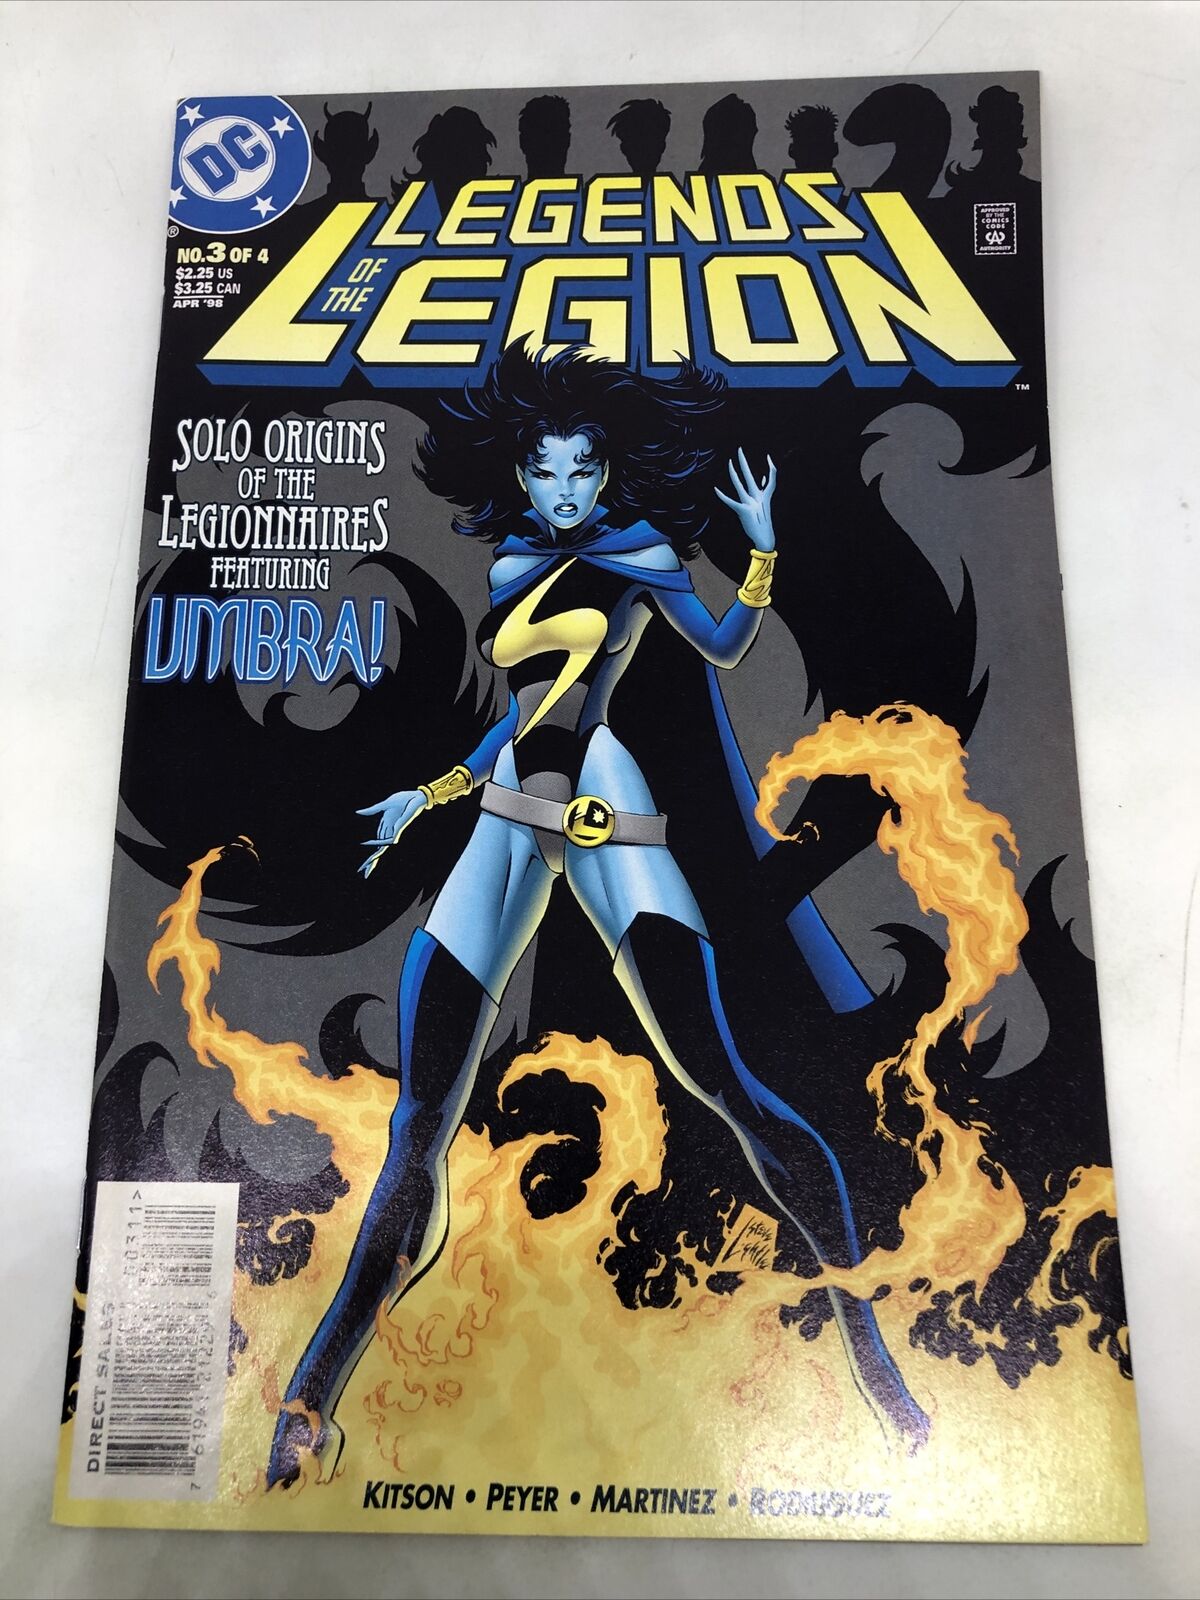 Legends of the Legion #3 April 1998